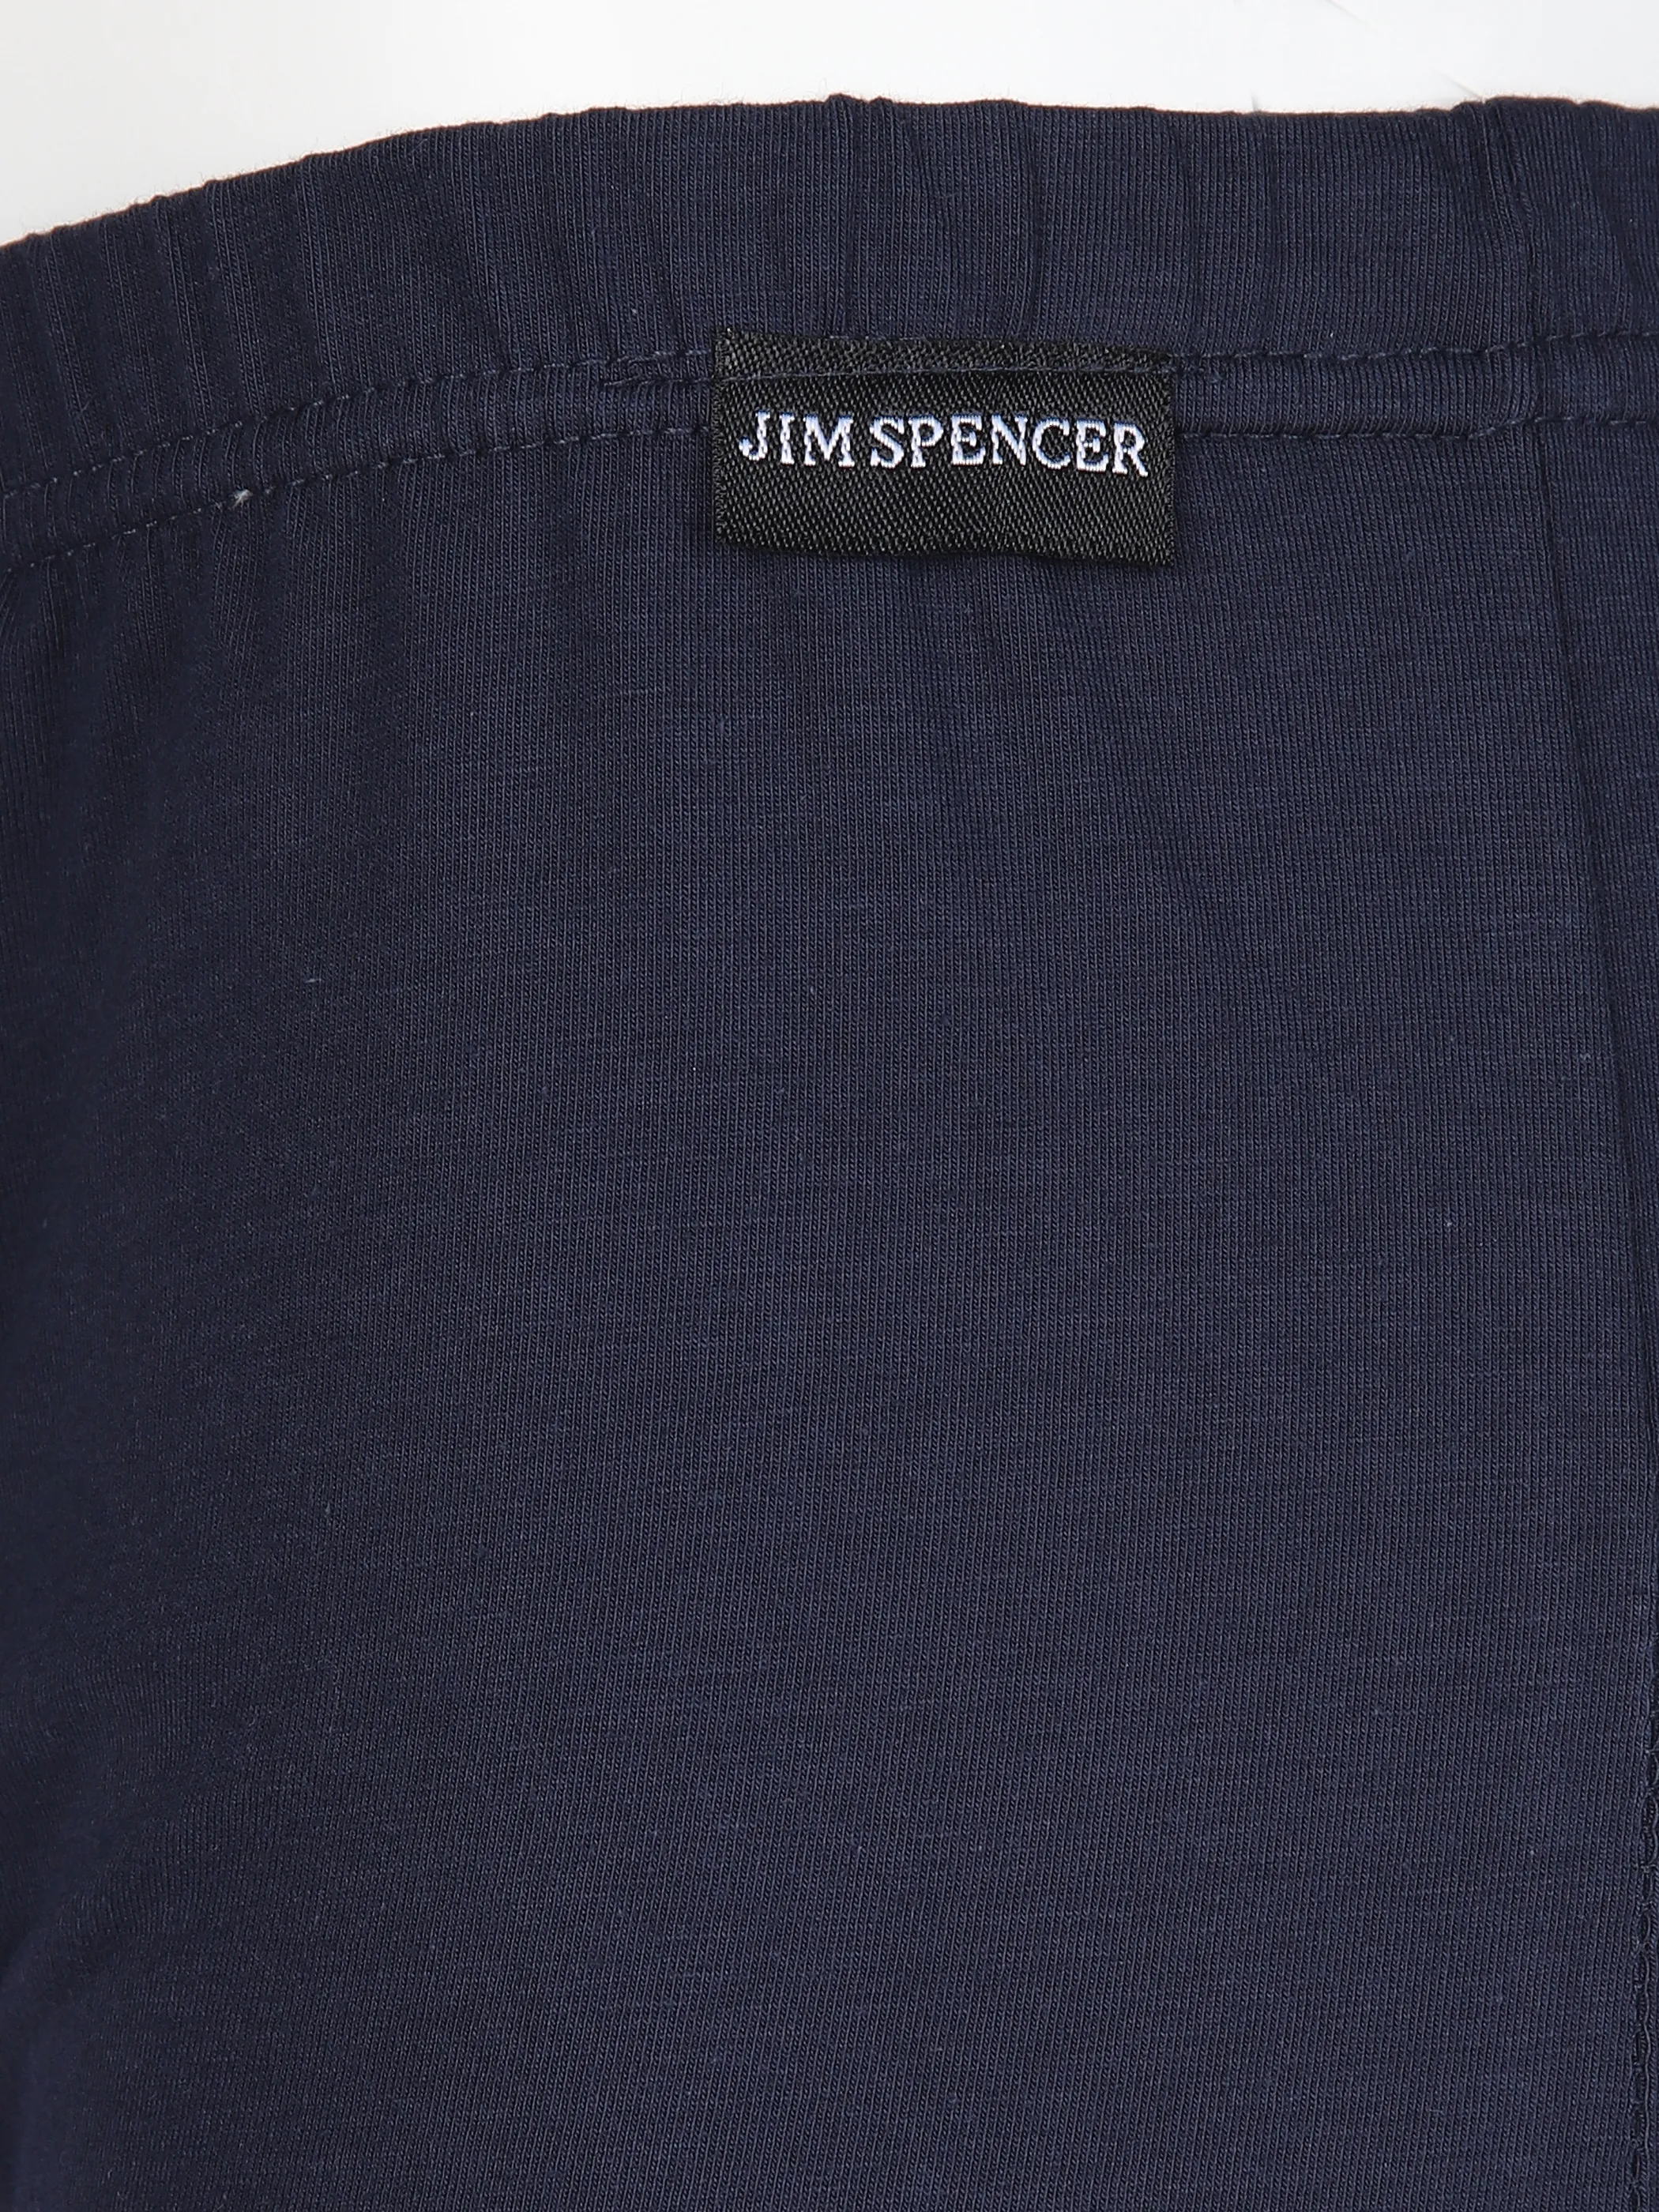 Jim Spencer He-Retro 2er Pack Blau 720079 018MARINE 3